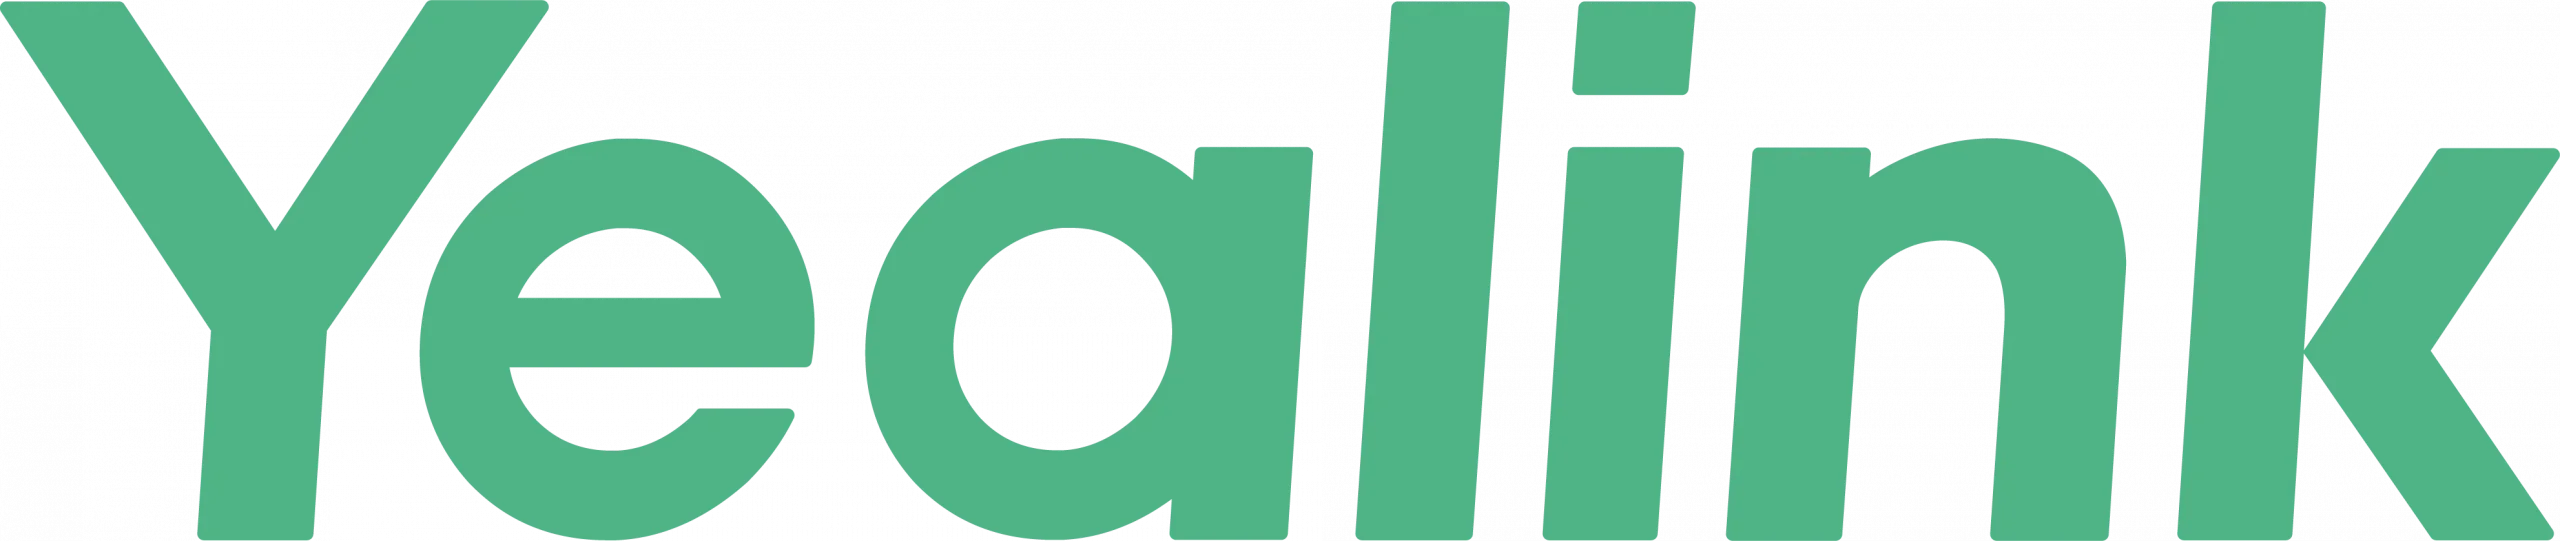 logo-yealink-verde